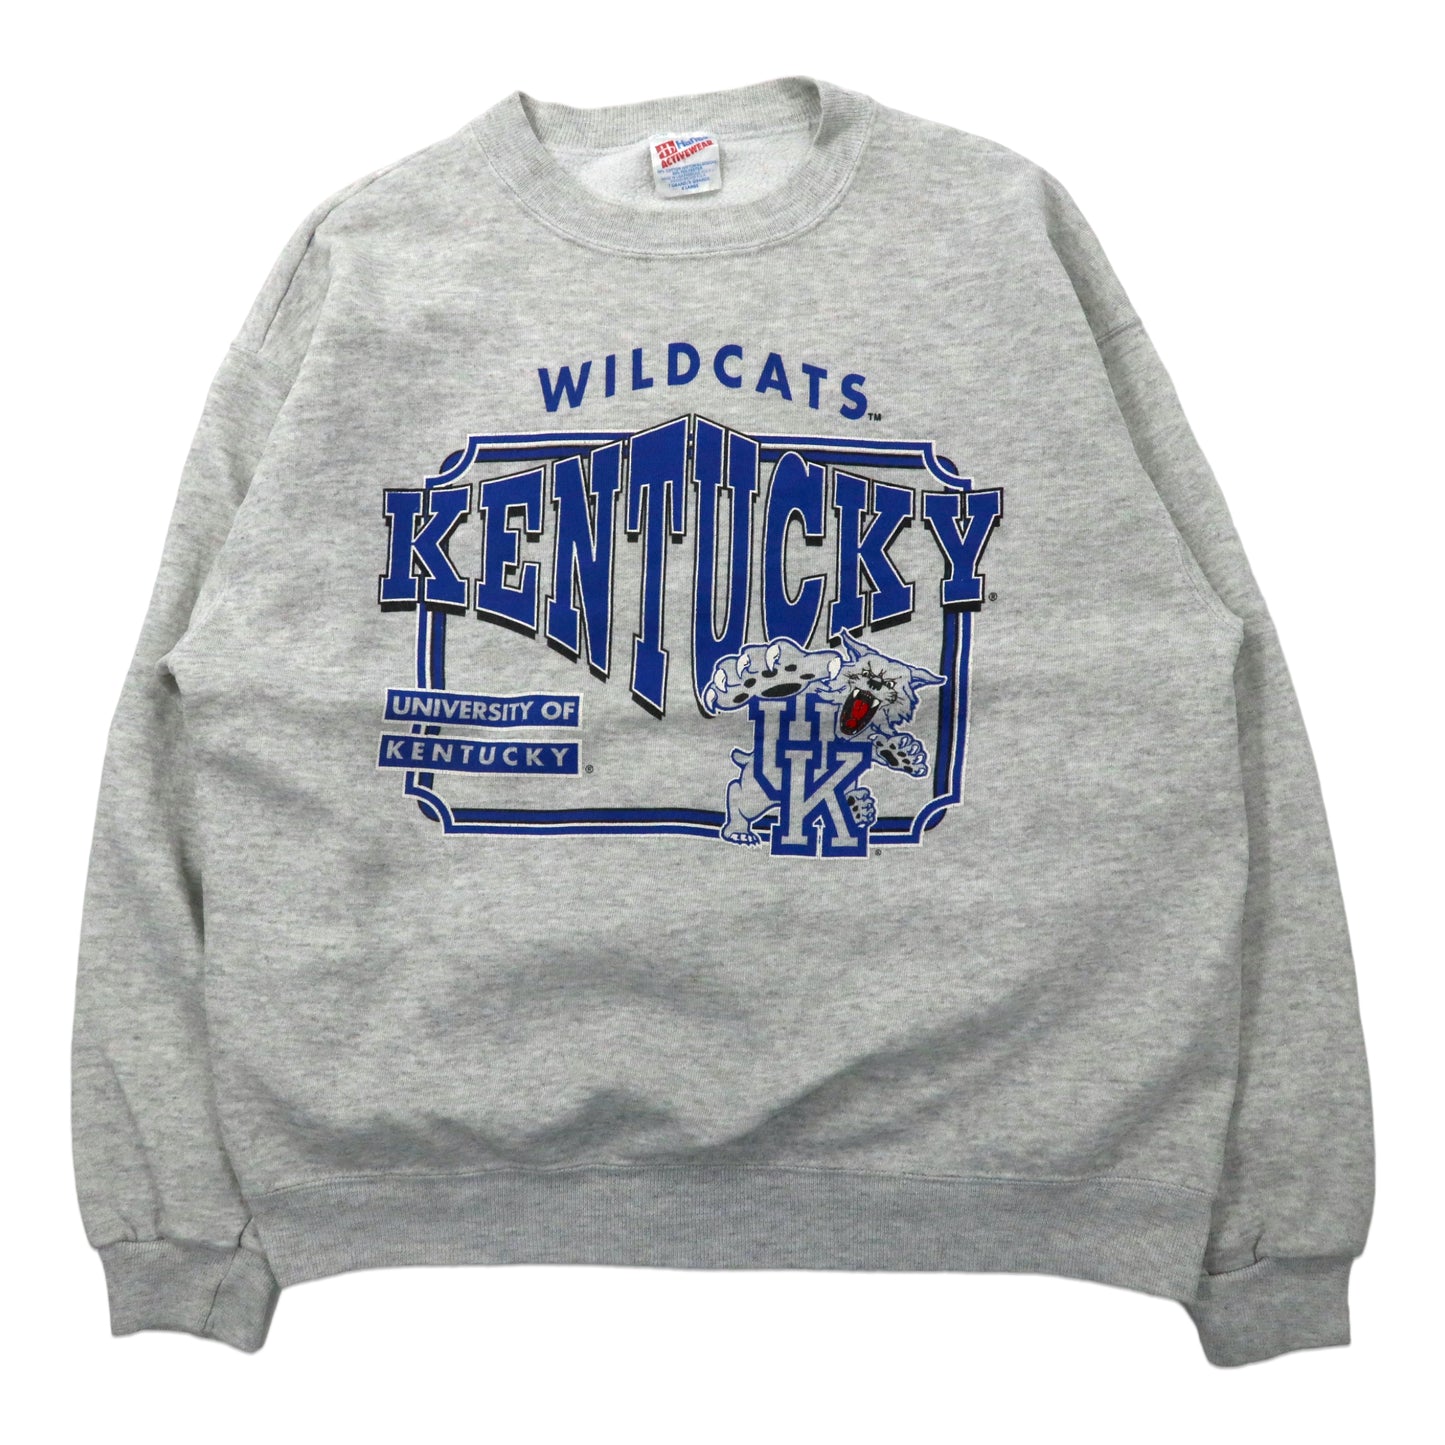 USA MADE 90s HANES College Print Sweatshirt XL Gray Cotton